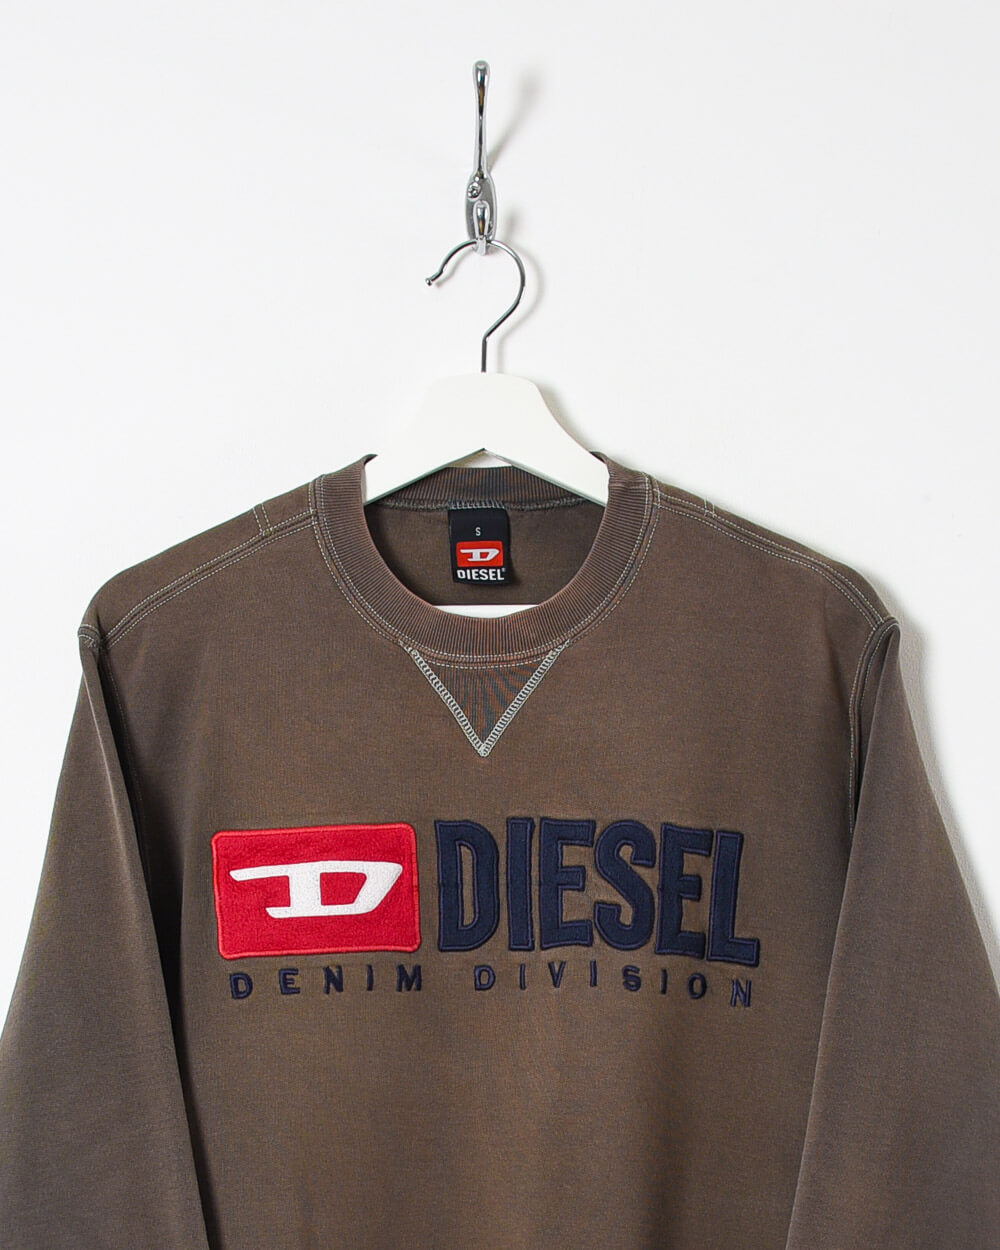 Diesel Denim Division Sweatshirt - Small - Domno Vintage 90s, 80s, 00s Retro and Vintage Clothing 